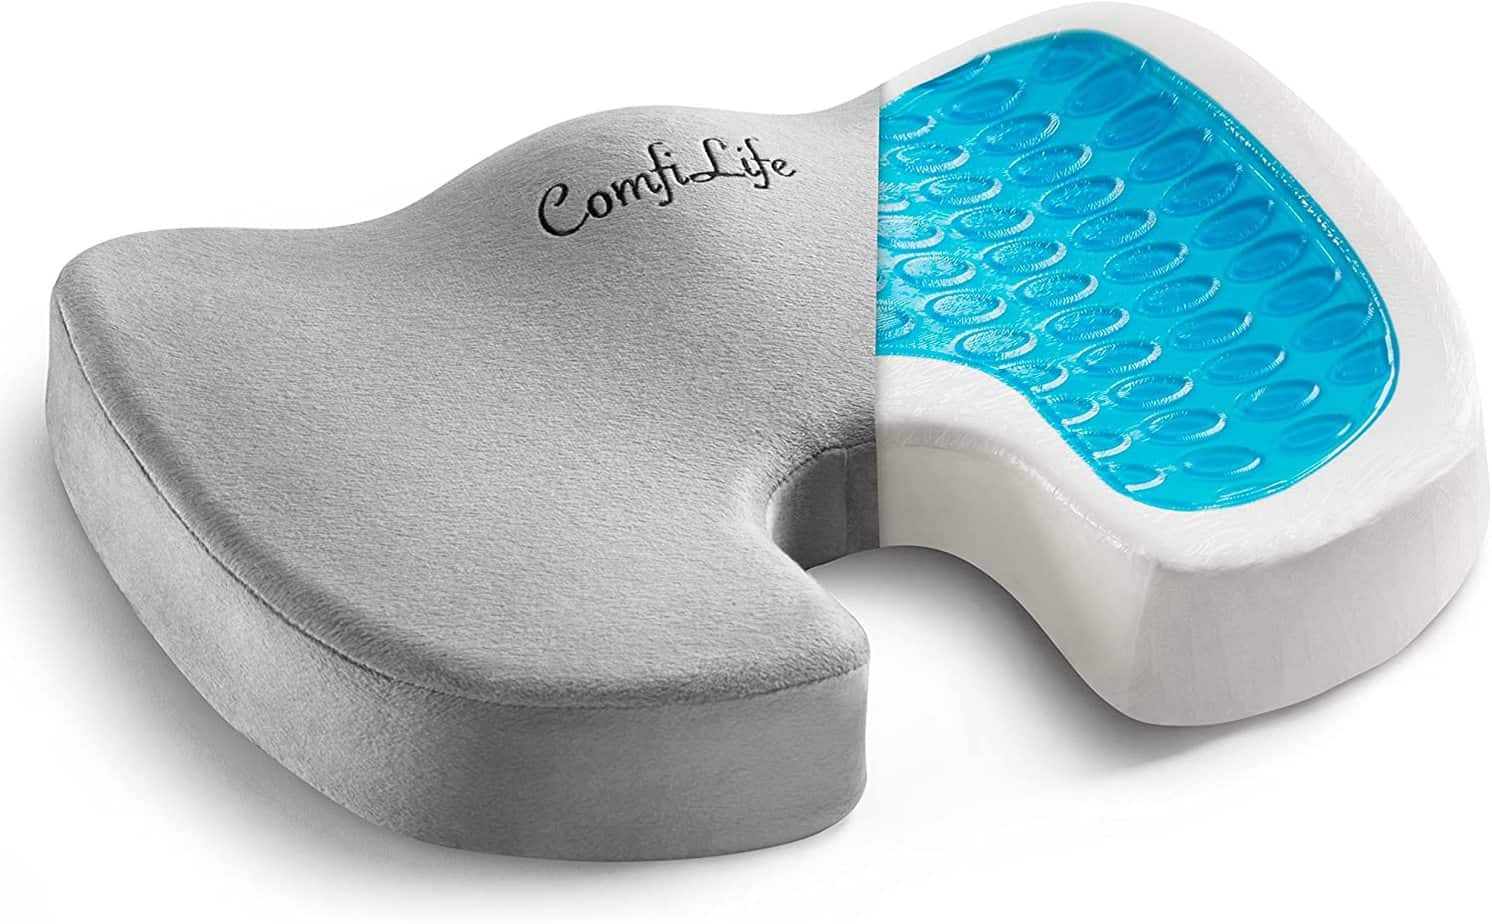 ComfiLife Gel Enhanced Seat Cushion1